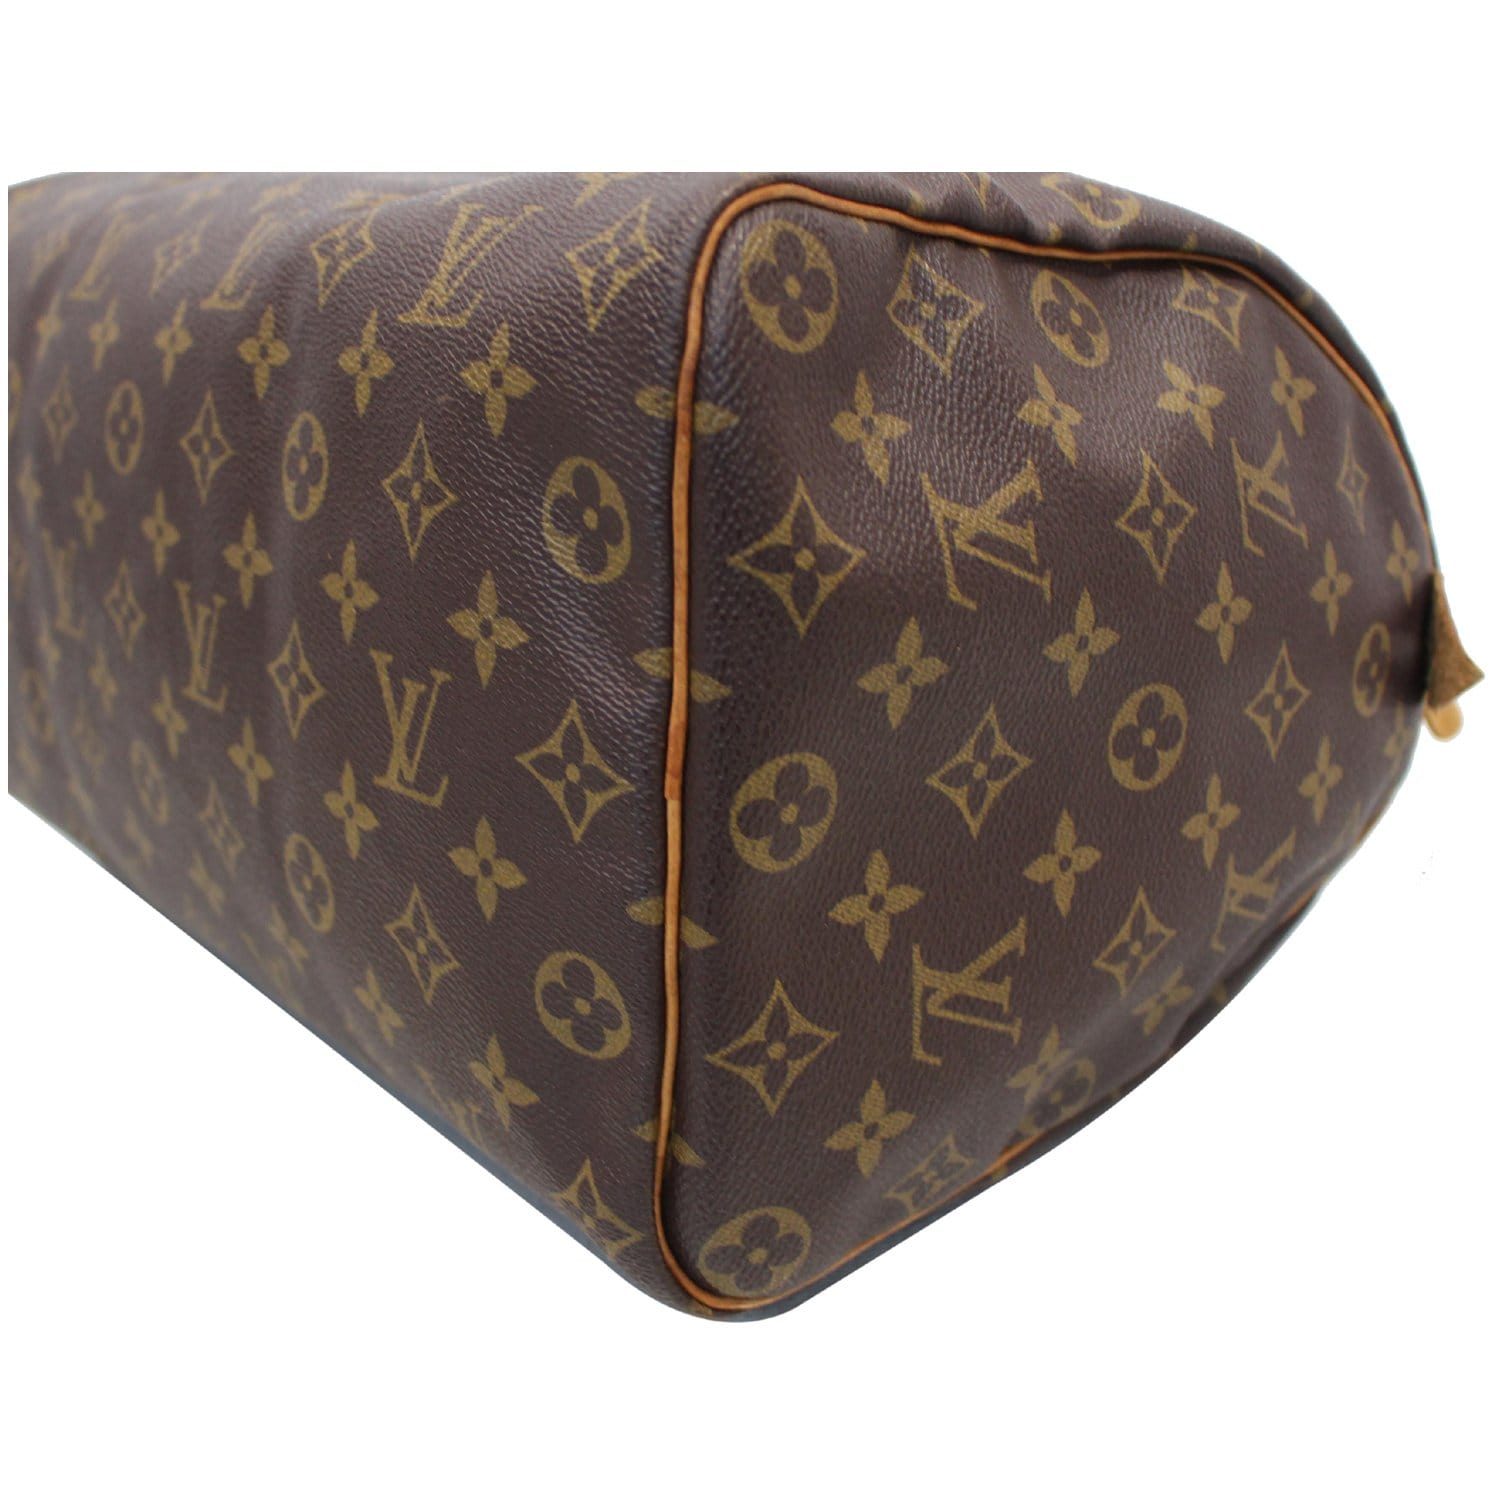 Louis Vuitton Speedy 35 Monogram Canvas Top Handle Bag on SALE